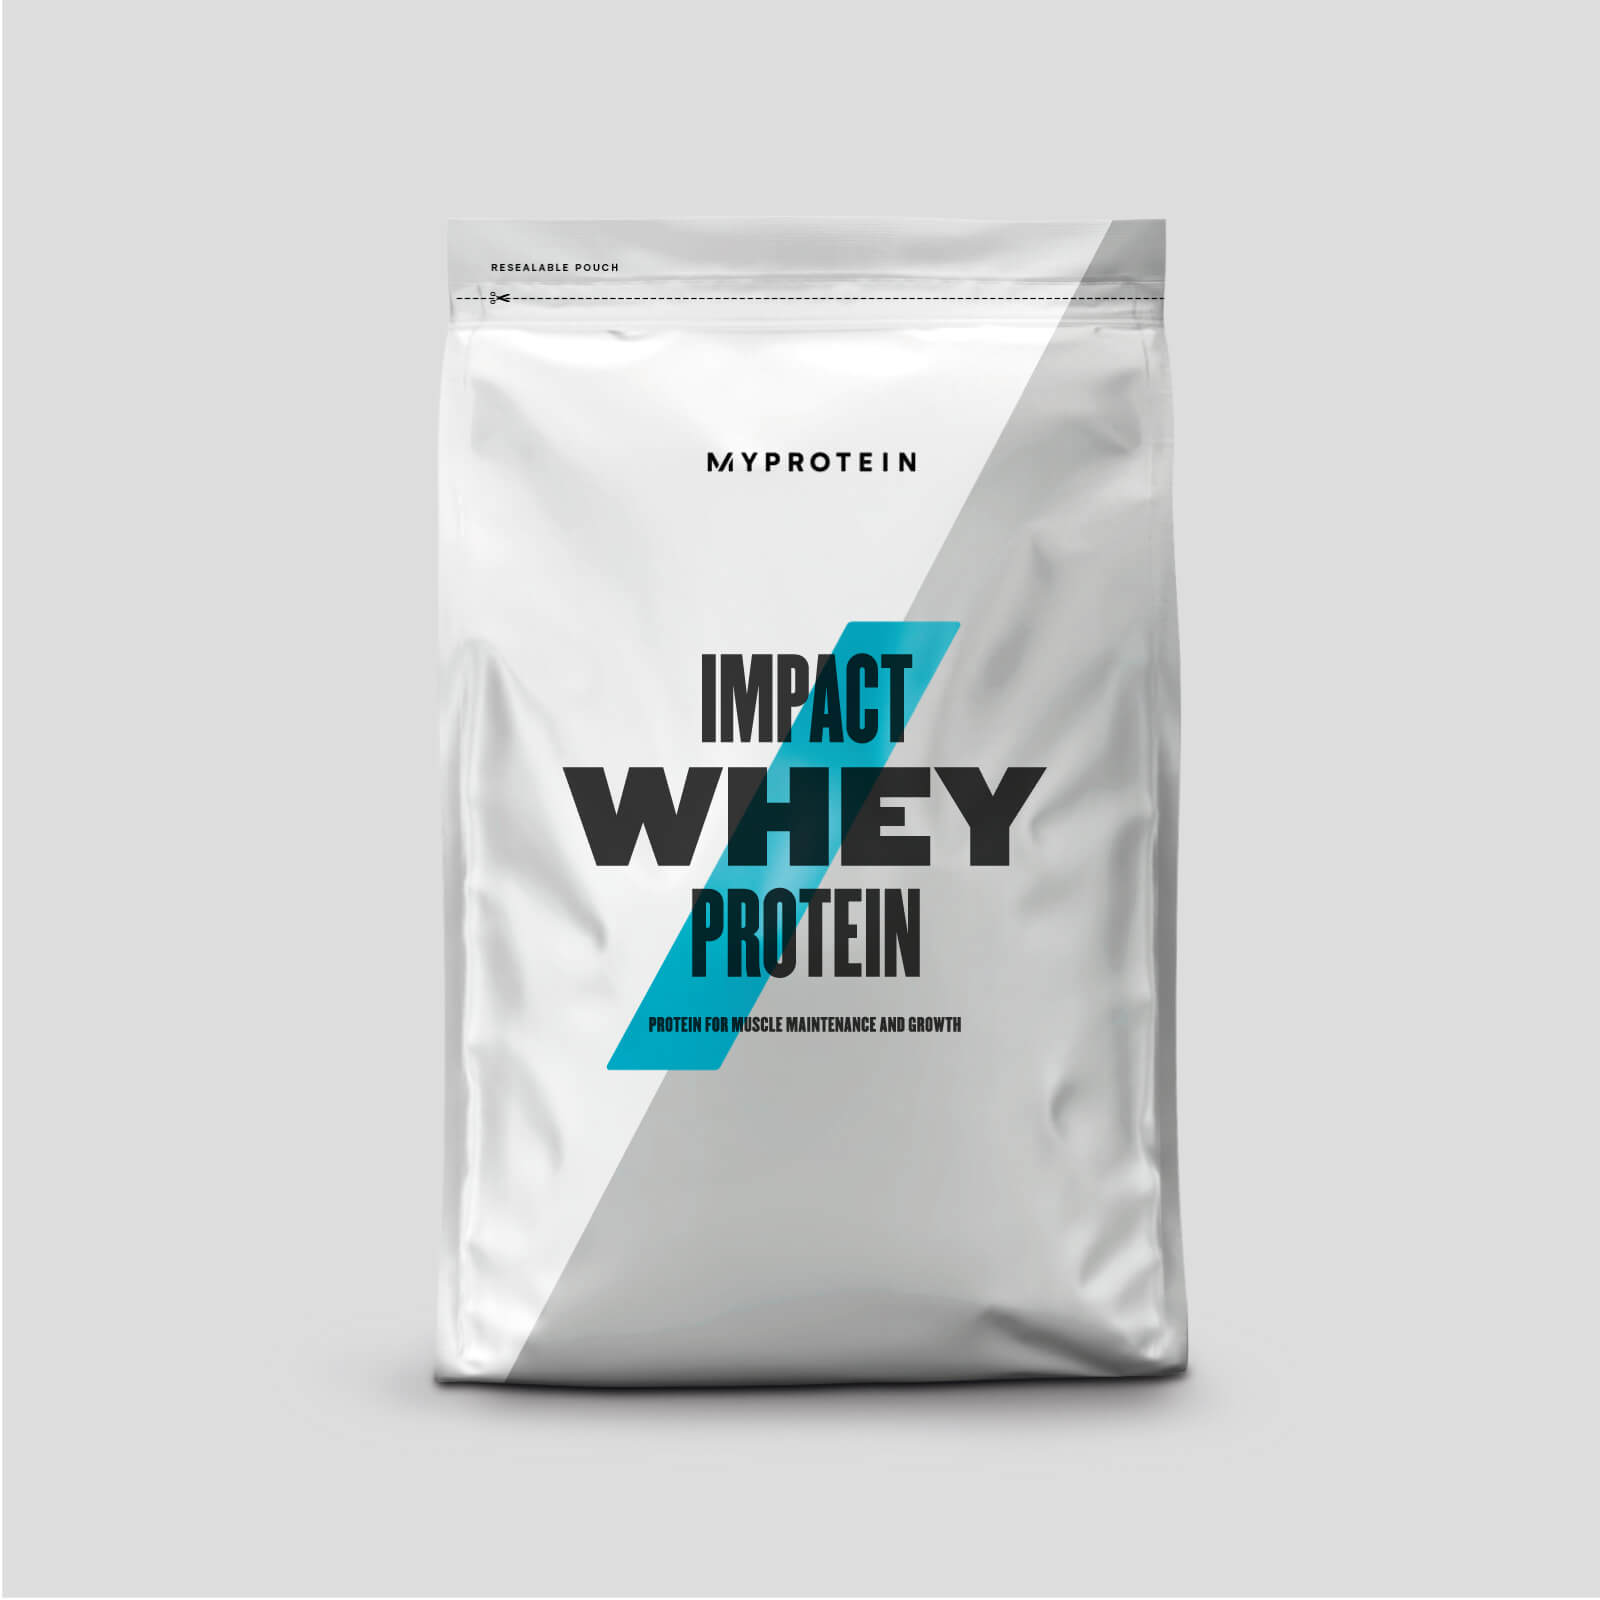 Myprotein Impact Whey Protein - 500g - Chocolate Smooth